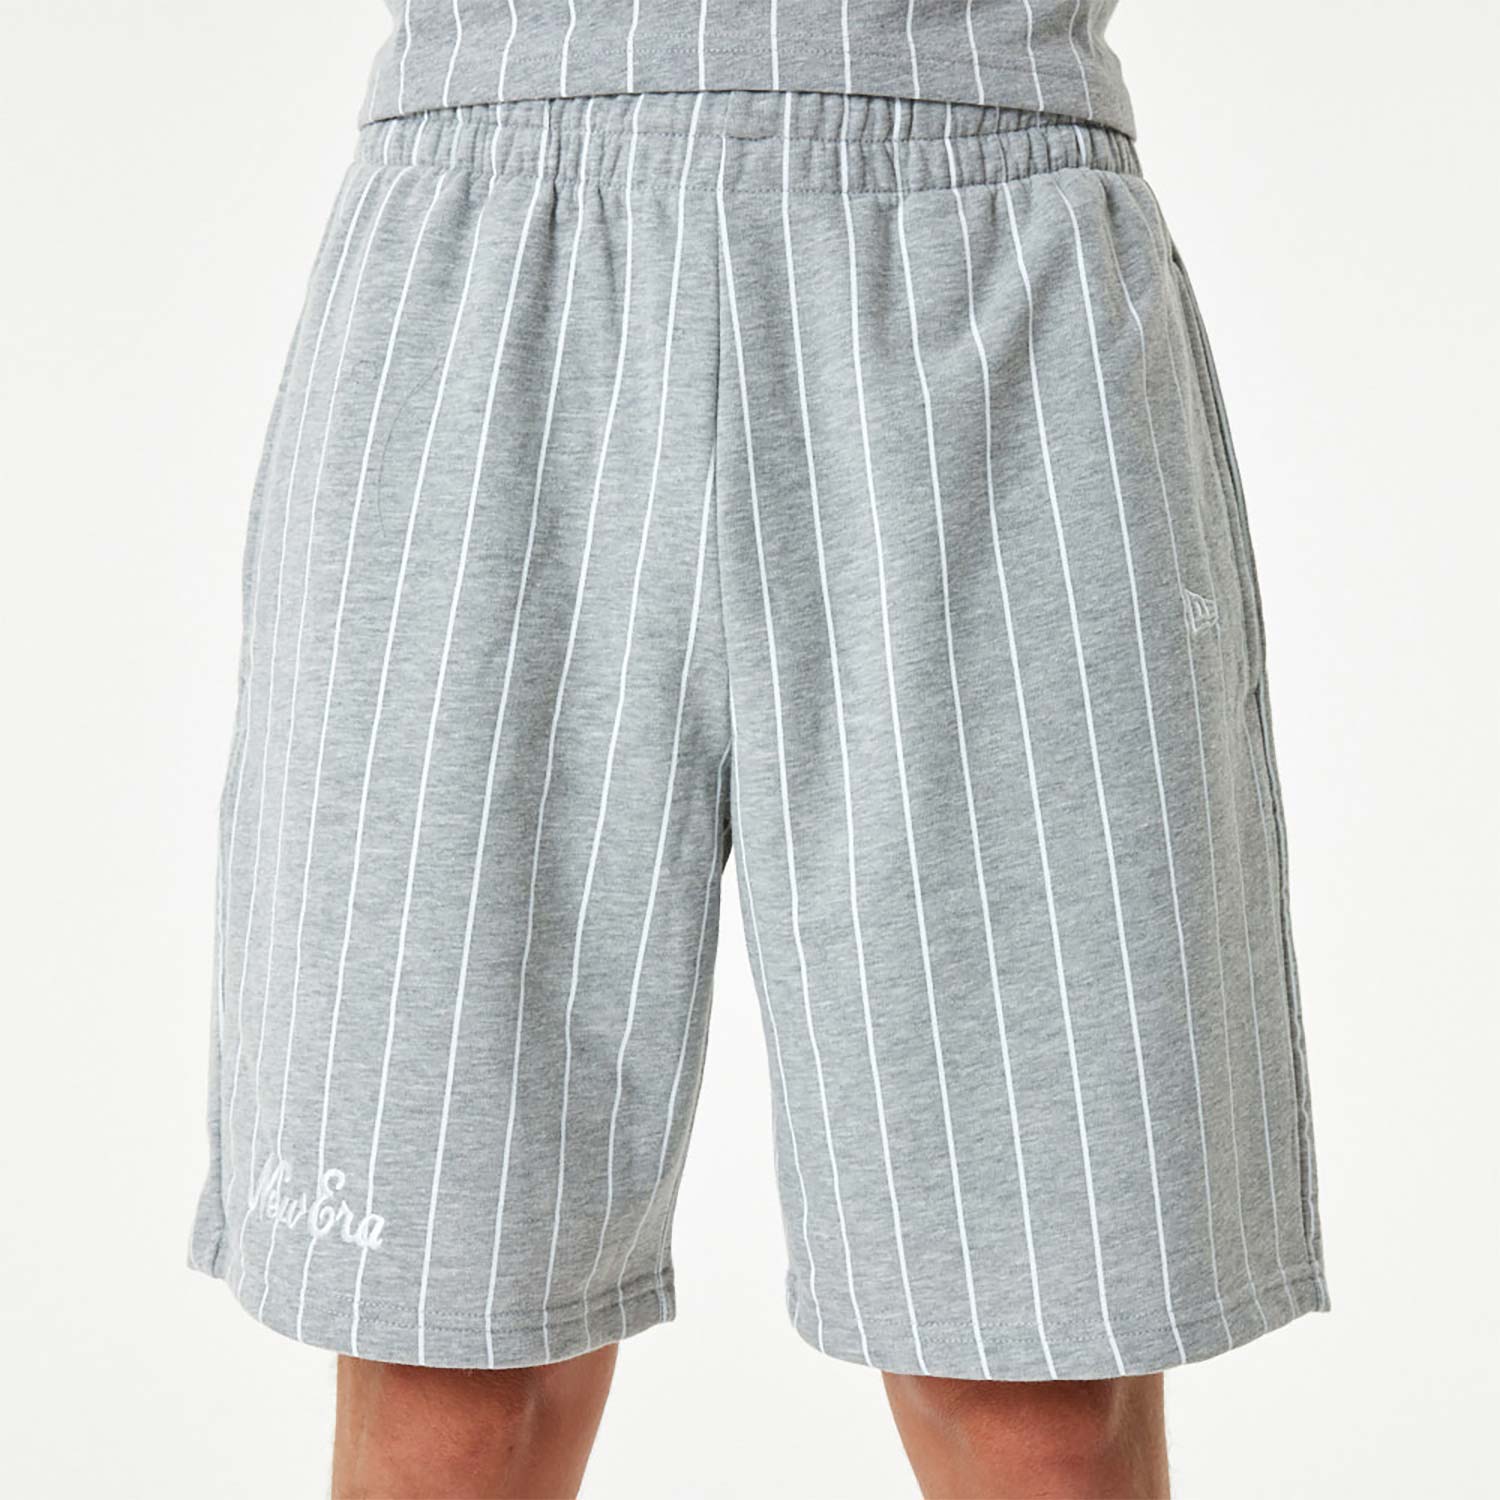 New Era Pinstripe Grey Shorts